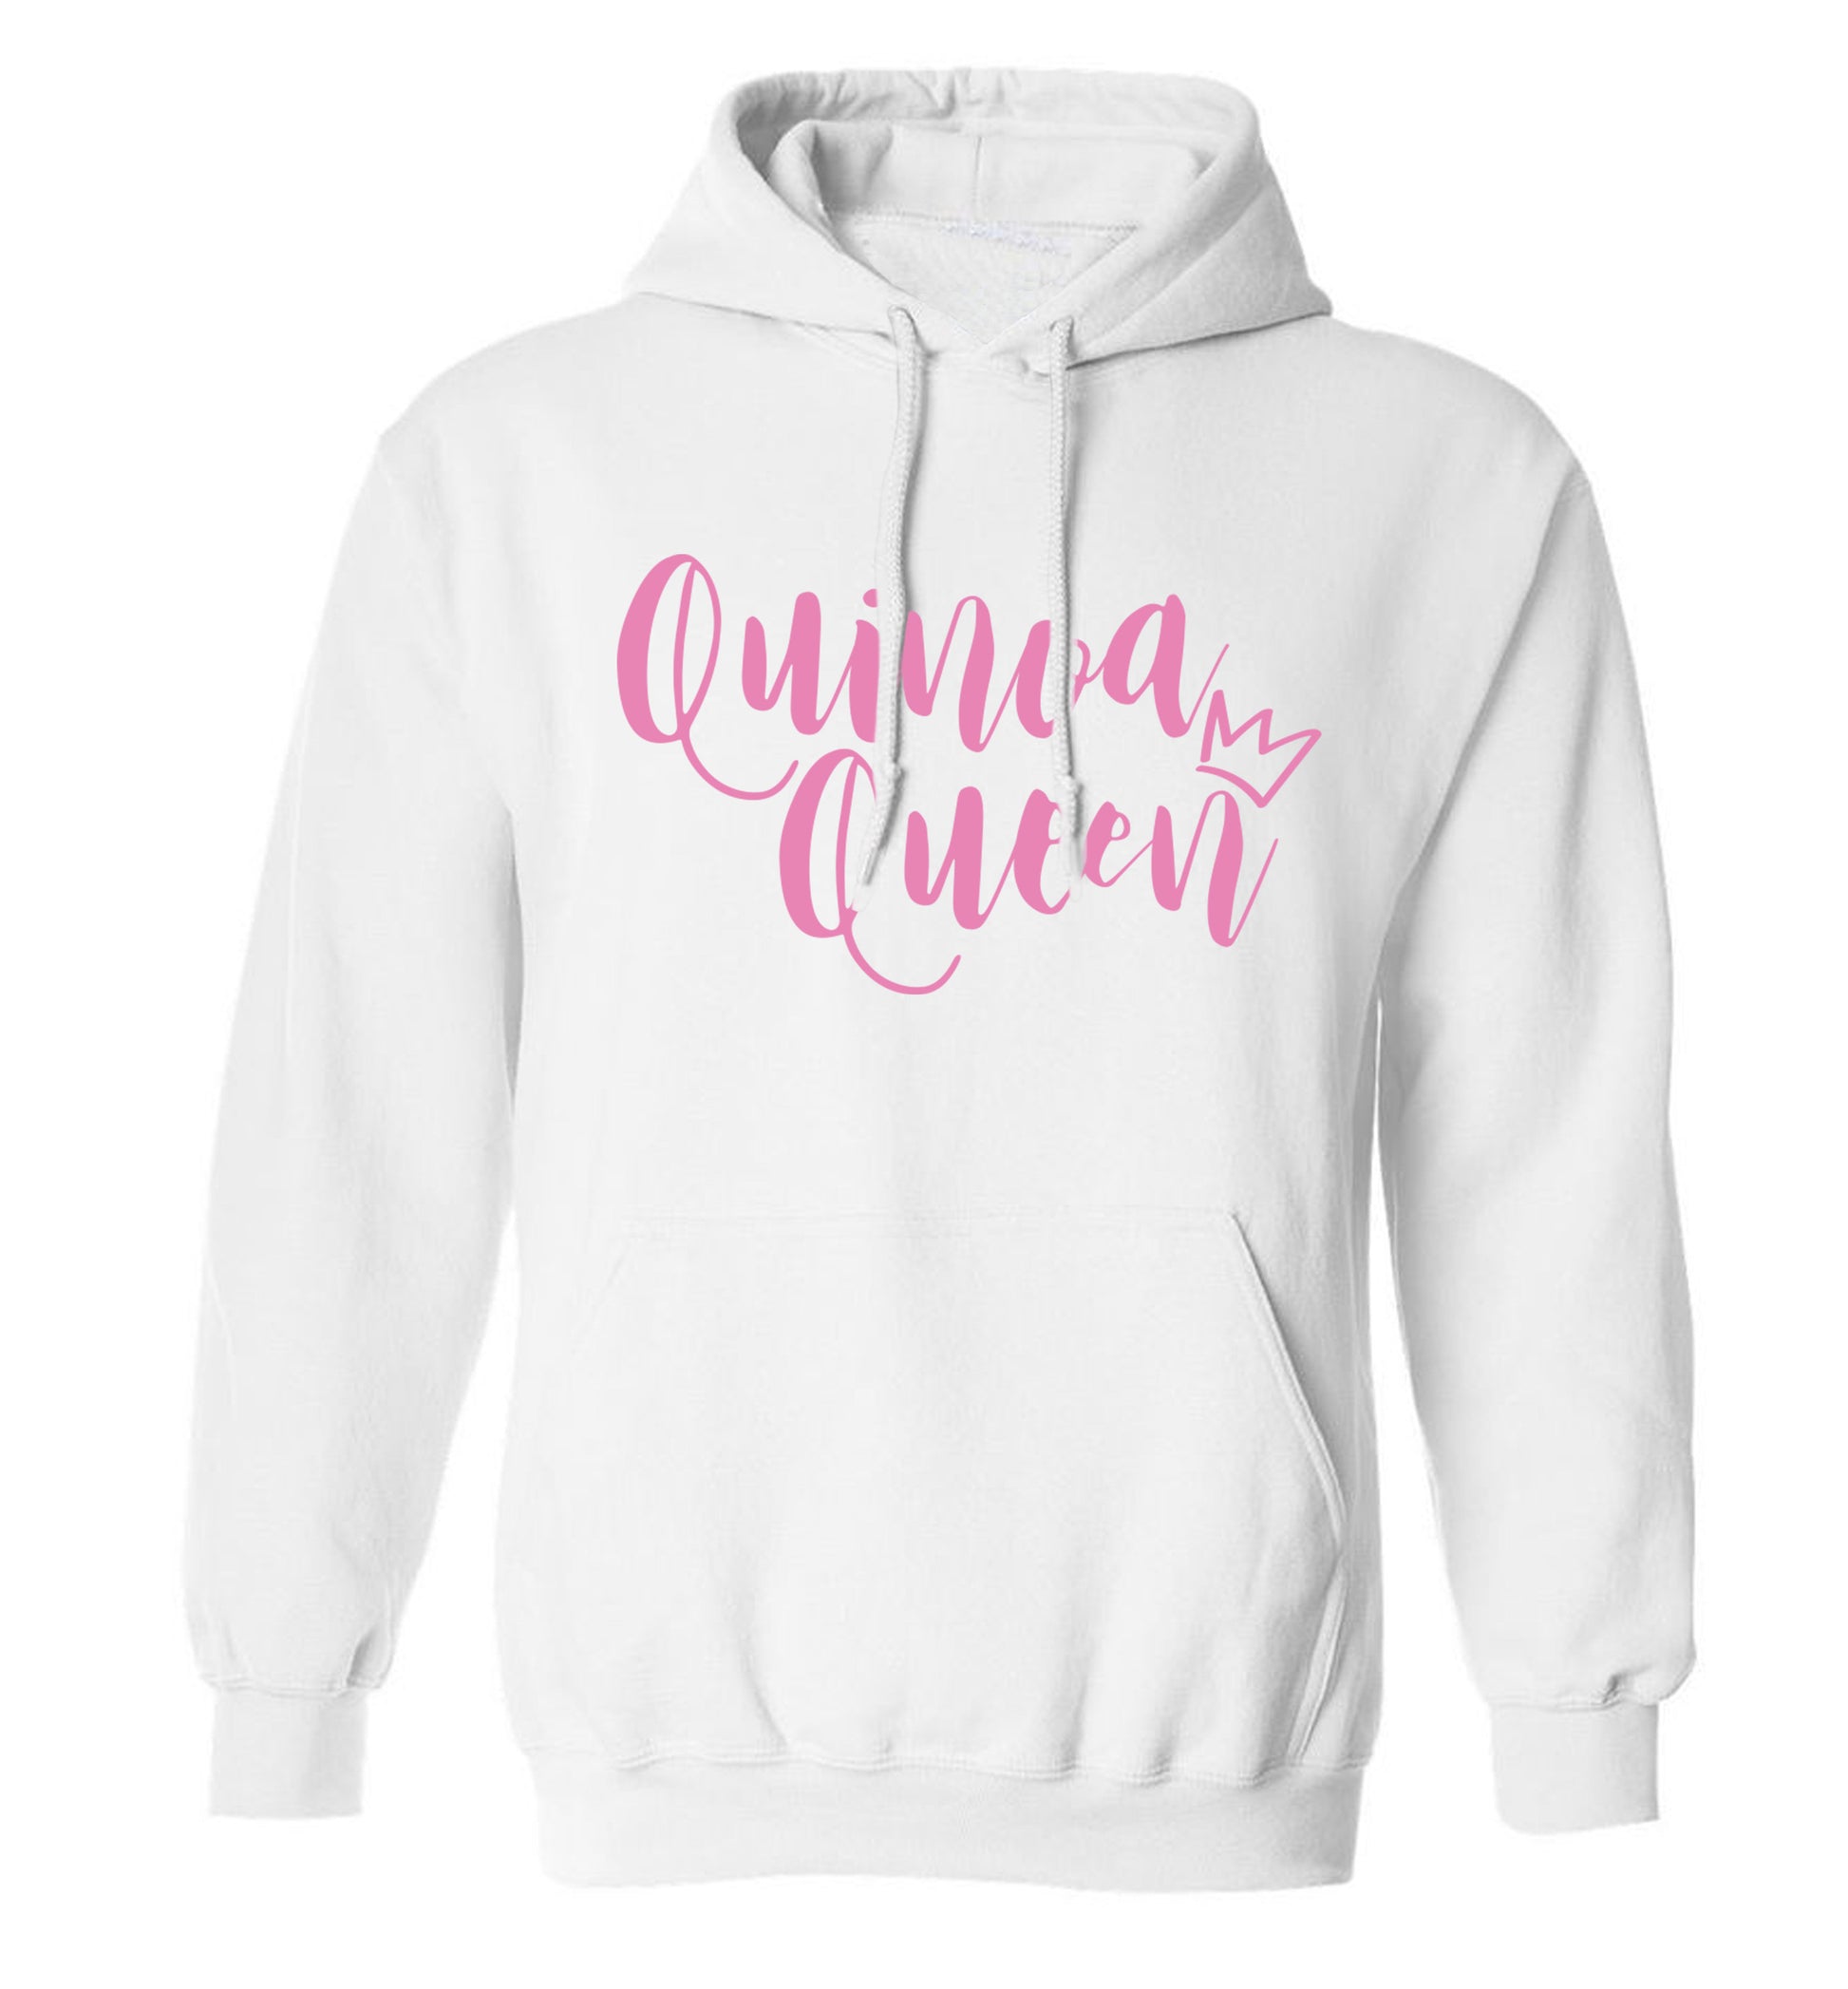 Quinoa Queen adults unisex white hoodie 2XL